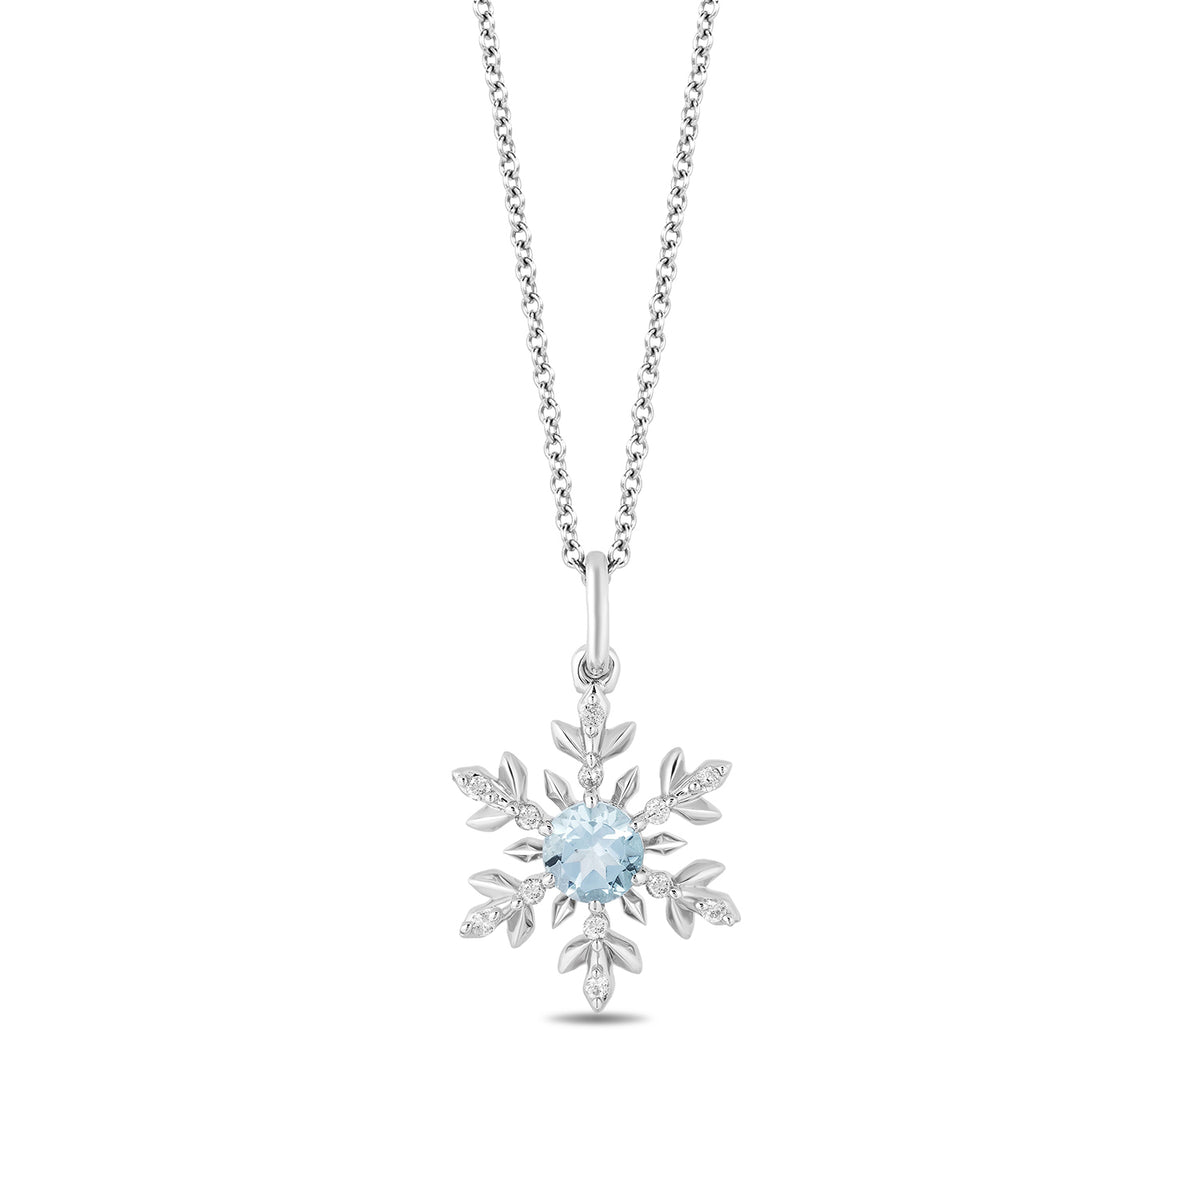 Buy Girl's Gift Frozen Snowflake Elsa Pendants Necklace Jewelry Girls Gift  at Amazon.in